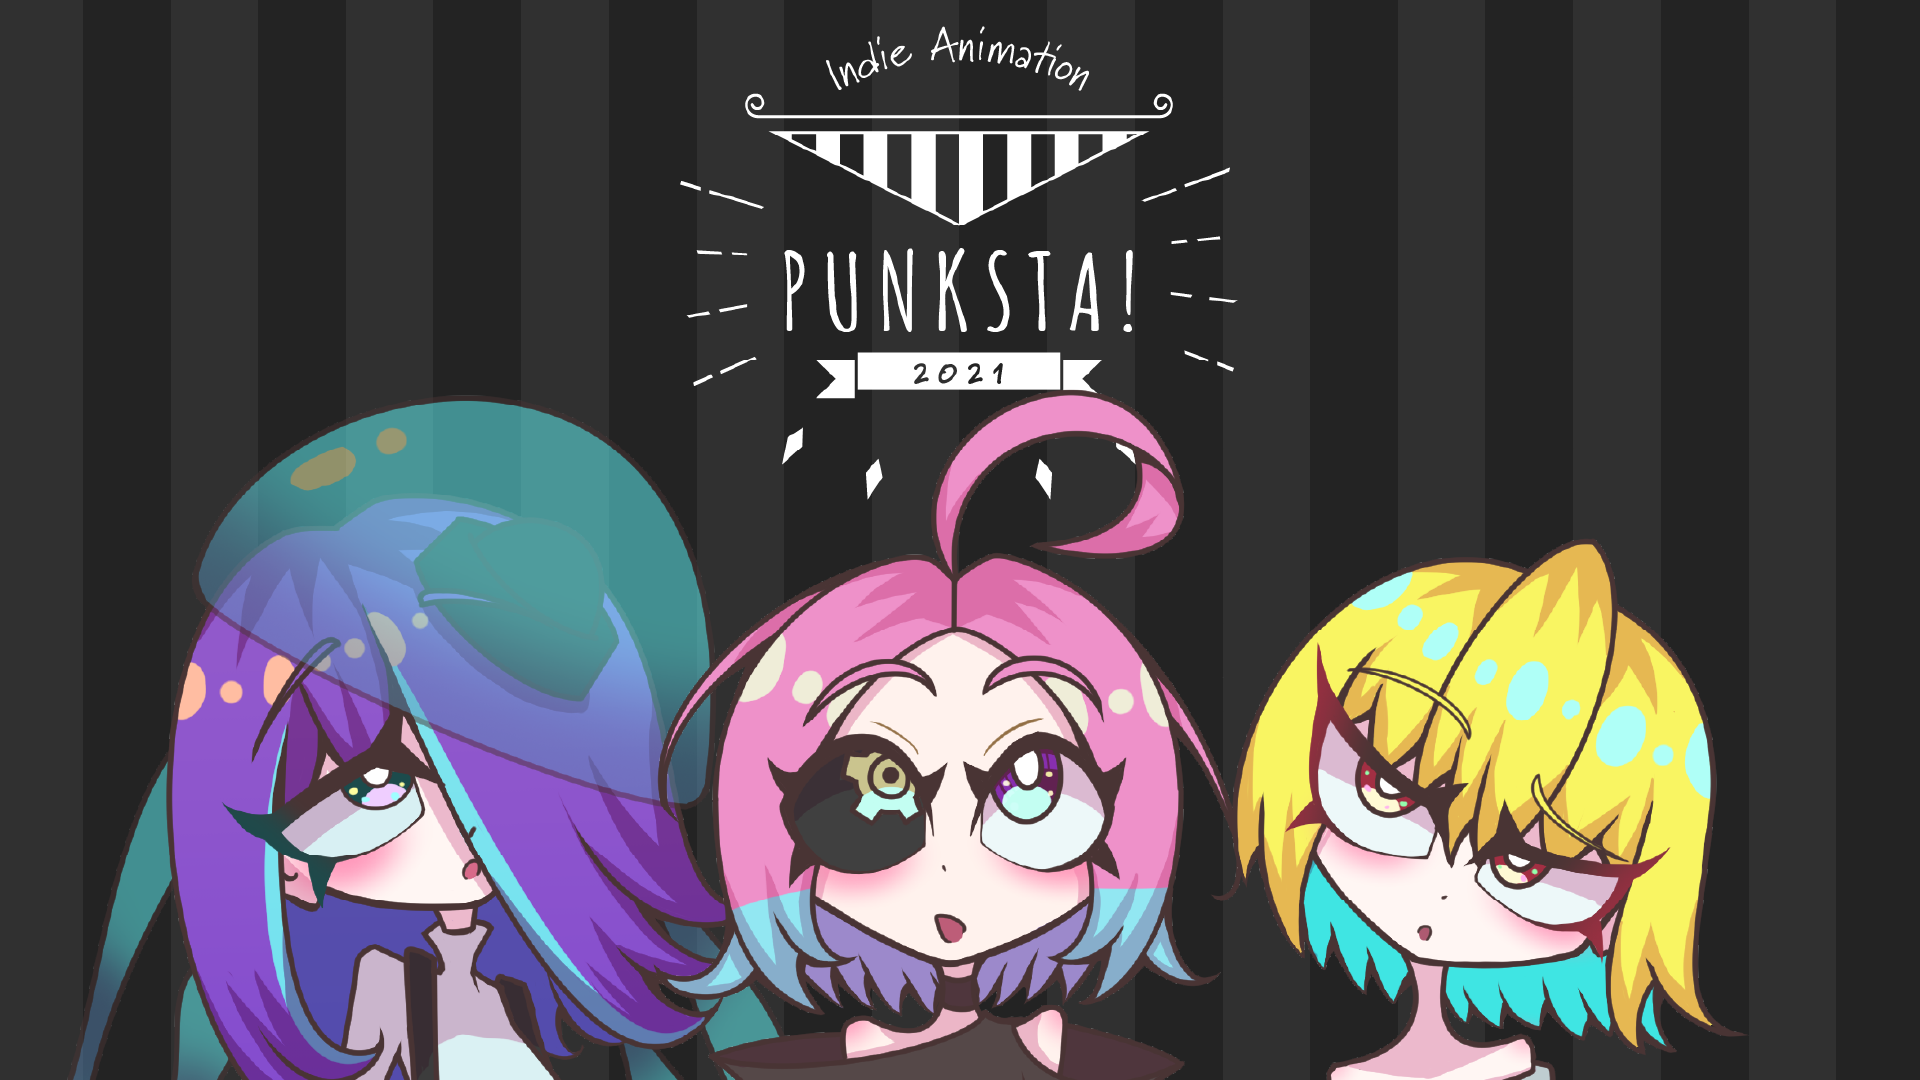 Punksta!